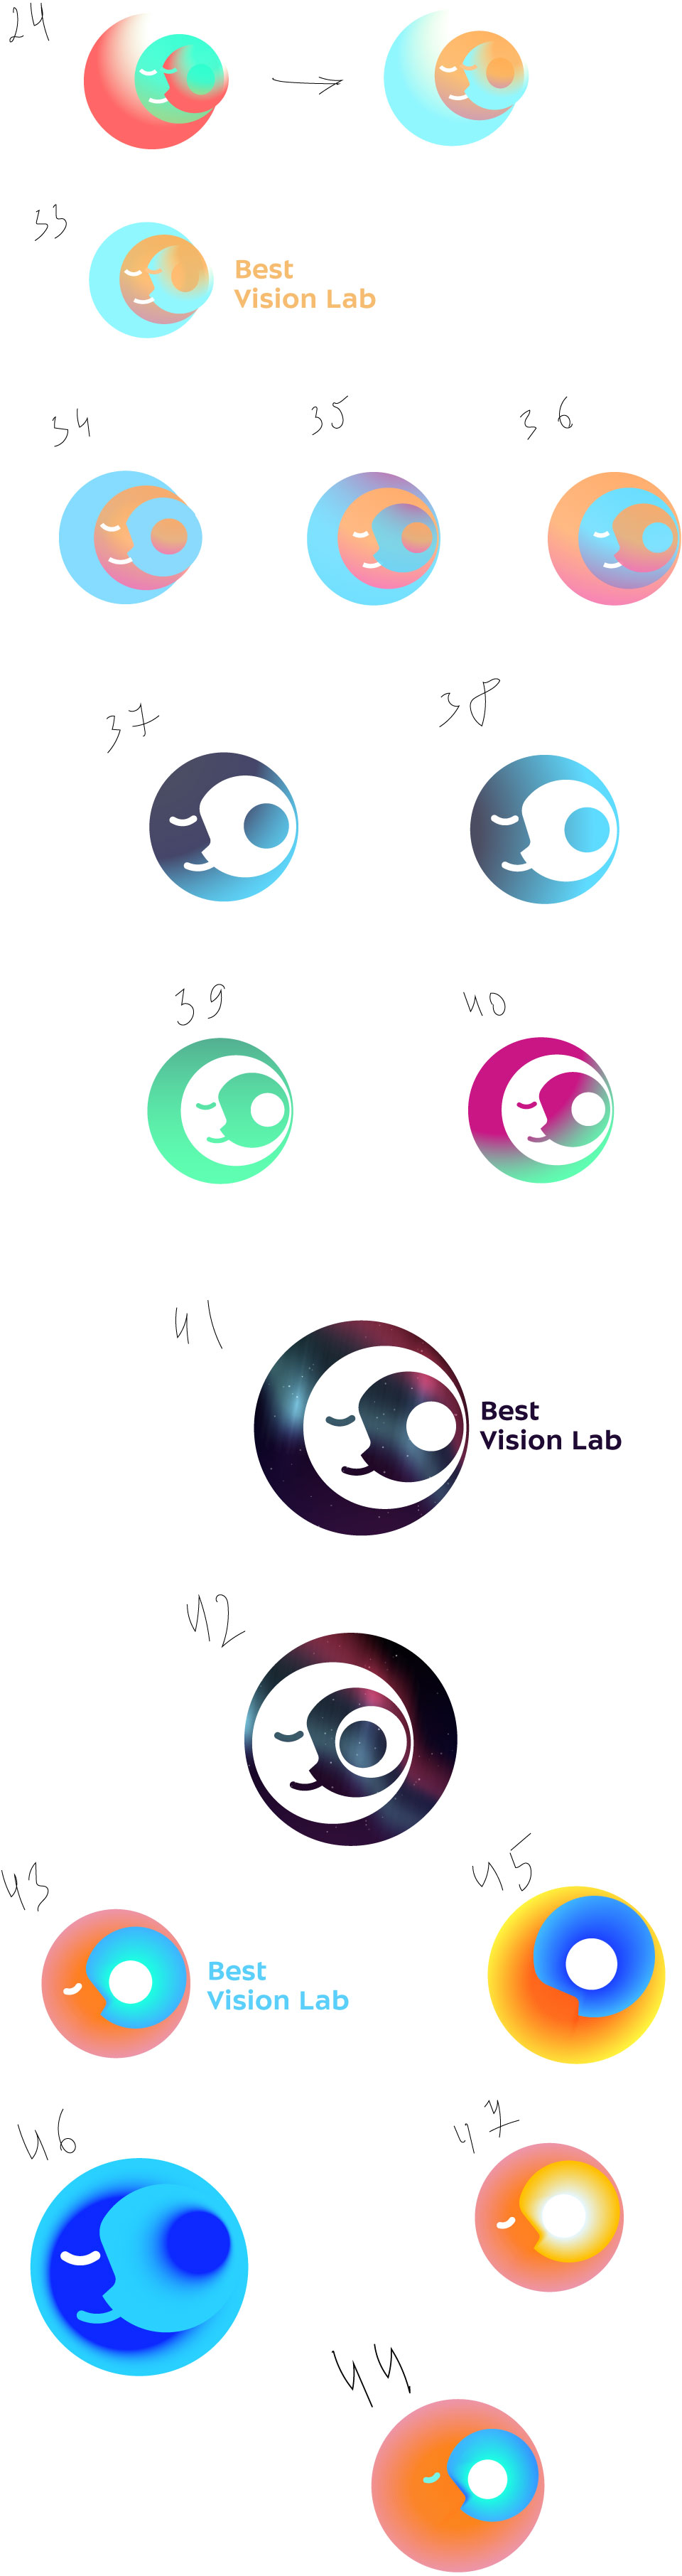 best vision lab process 15